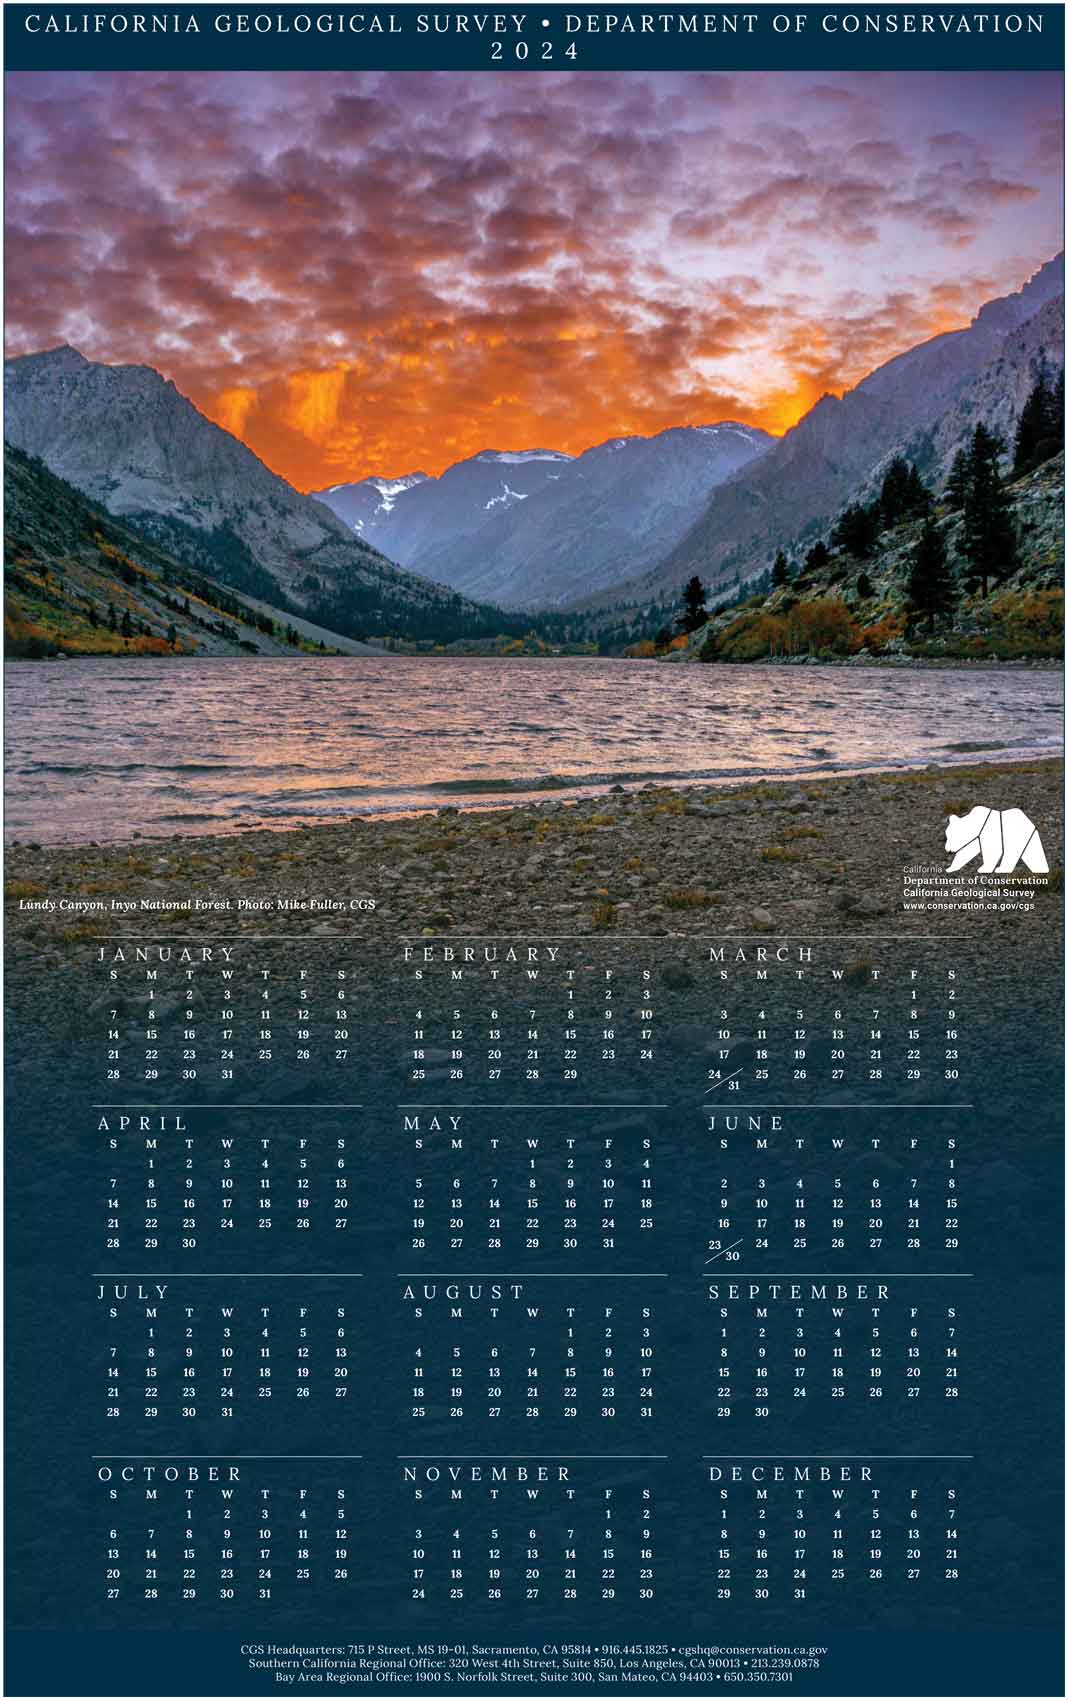 Thumbnail image of the CGS calendar vertical version